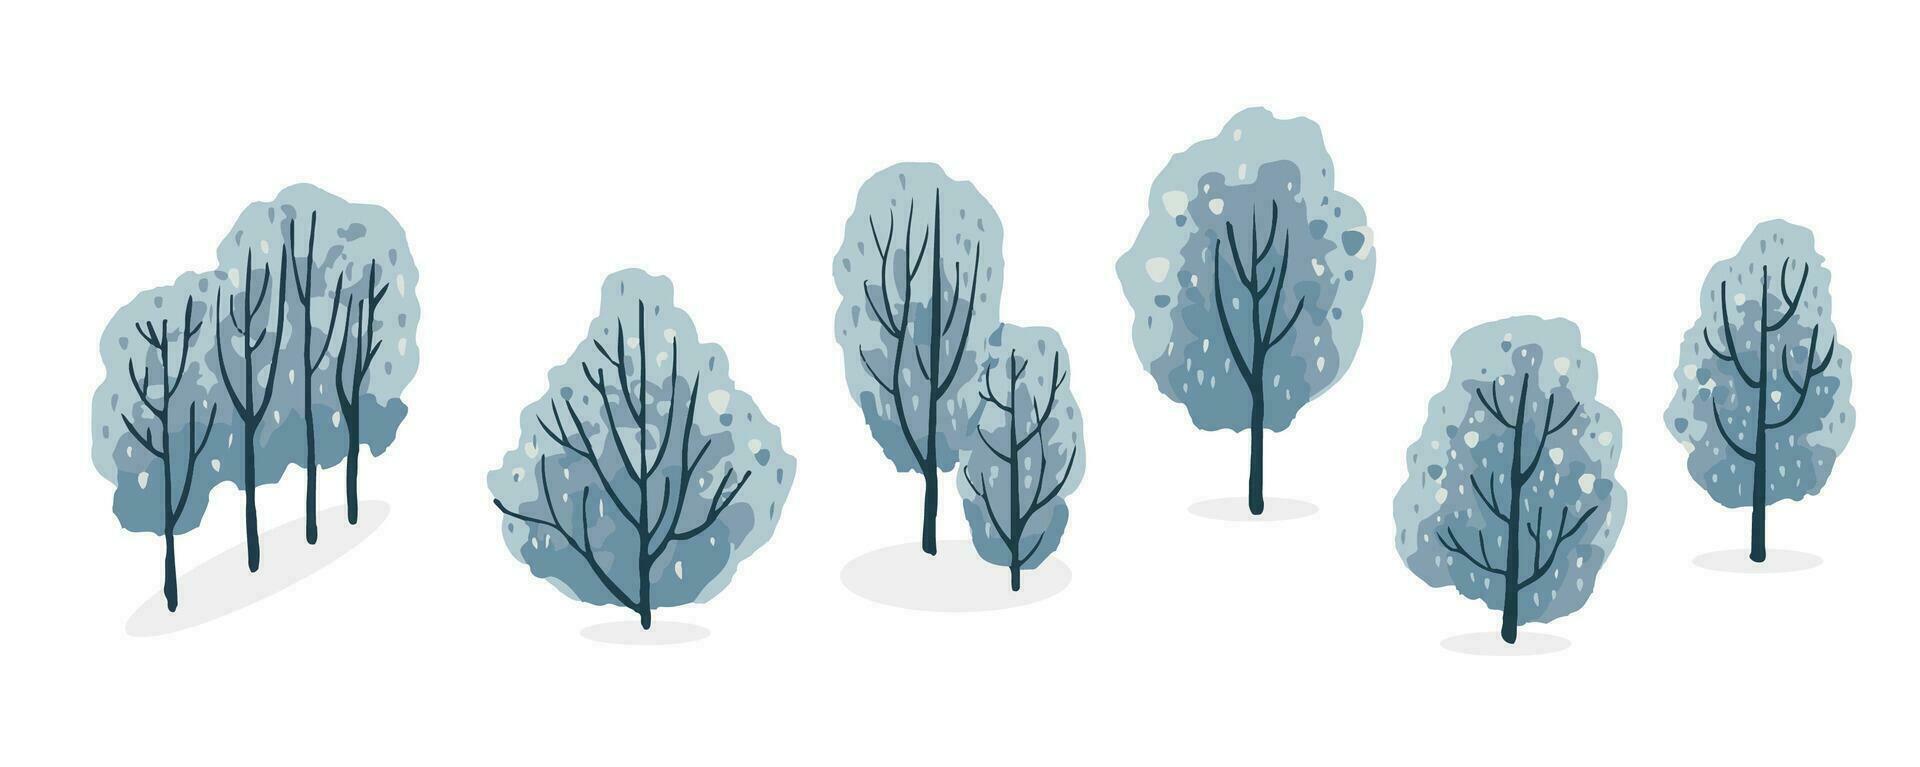 winter tree object set.Editable vector illustration for postcard